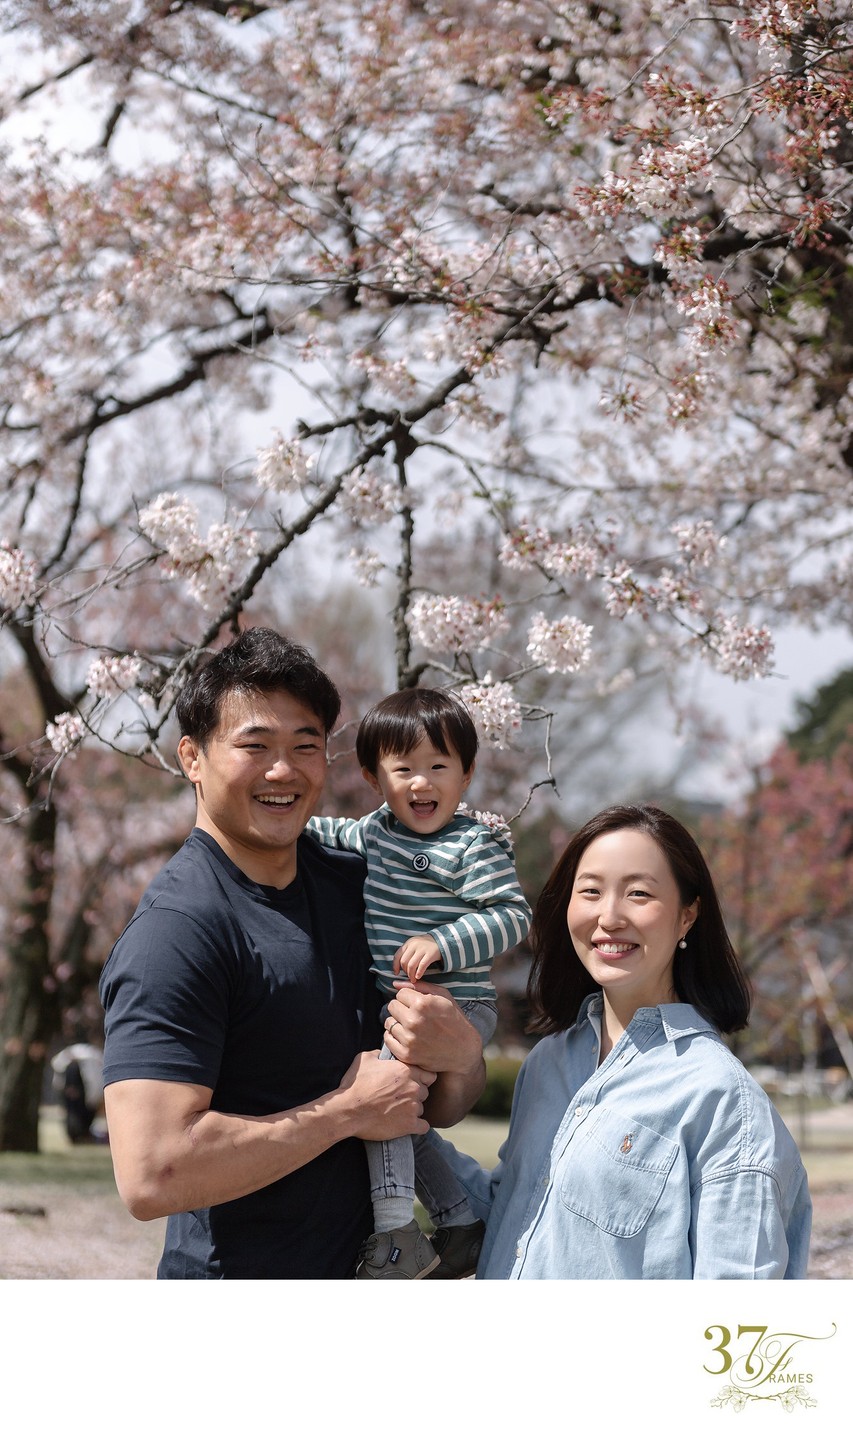 Shinjuku's Floral Delight: Family Portraits in Spring